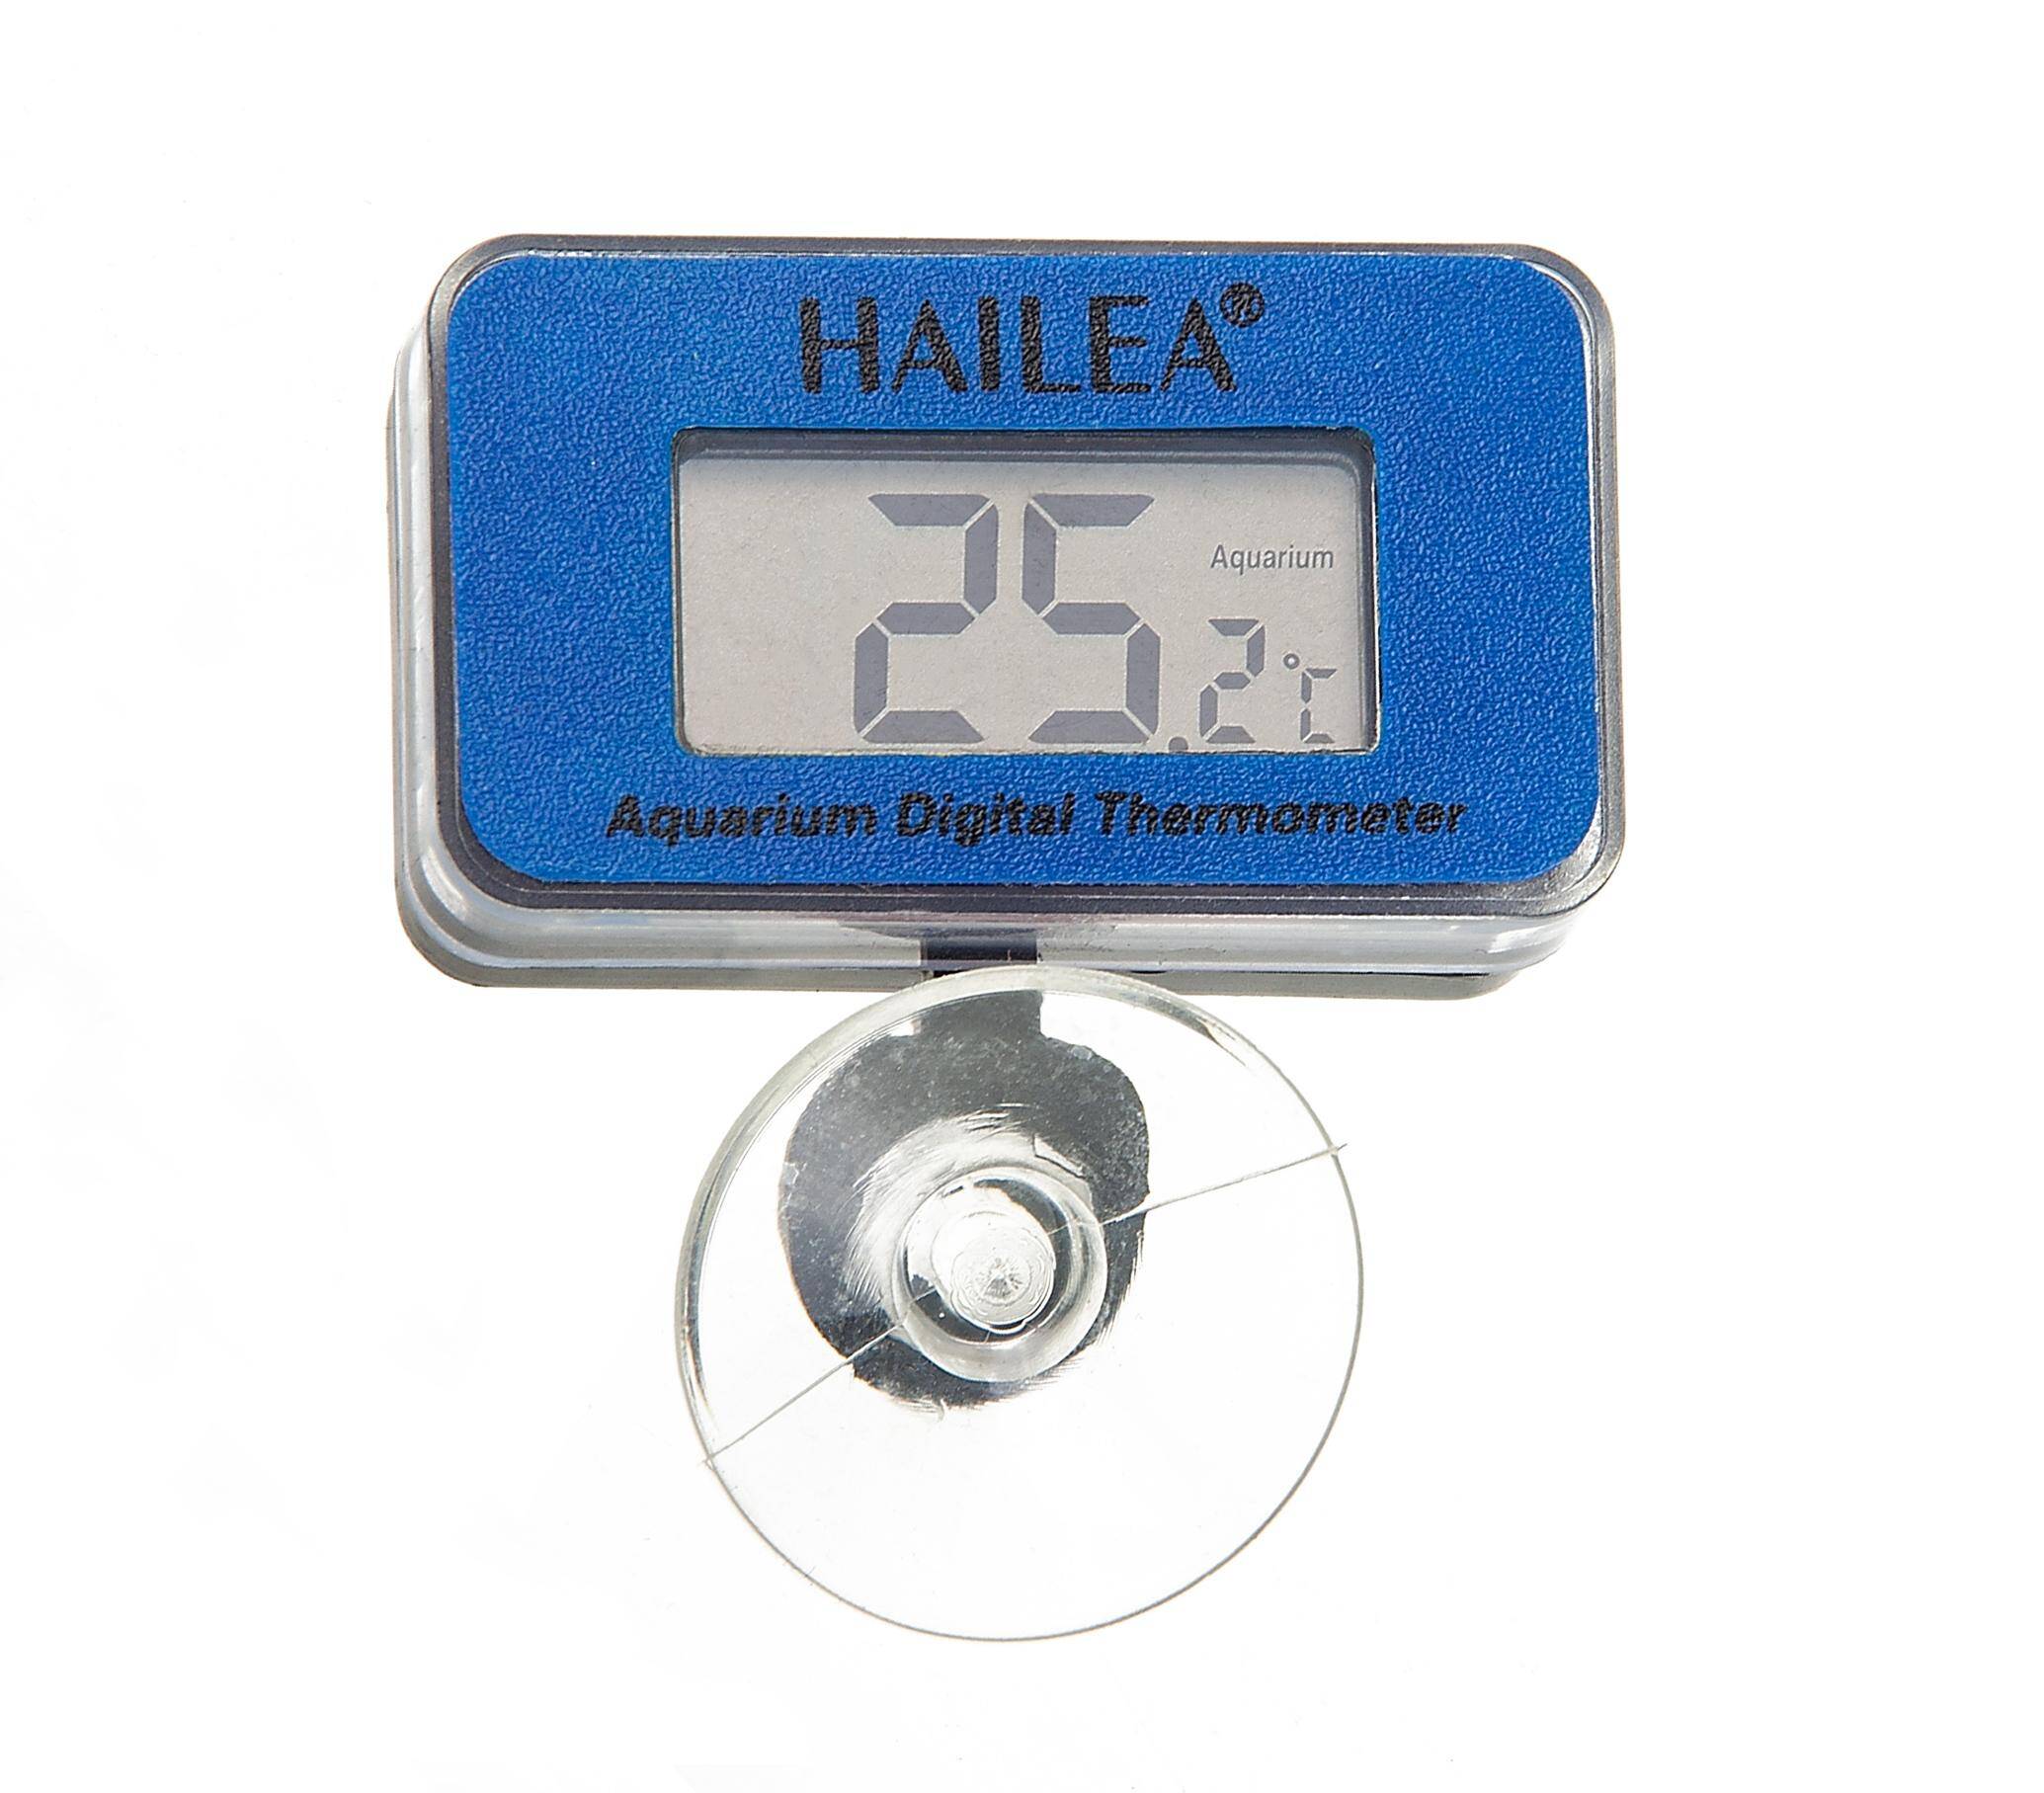 Termometr elektroniczny Hailea